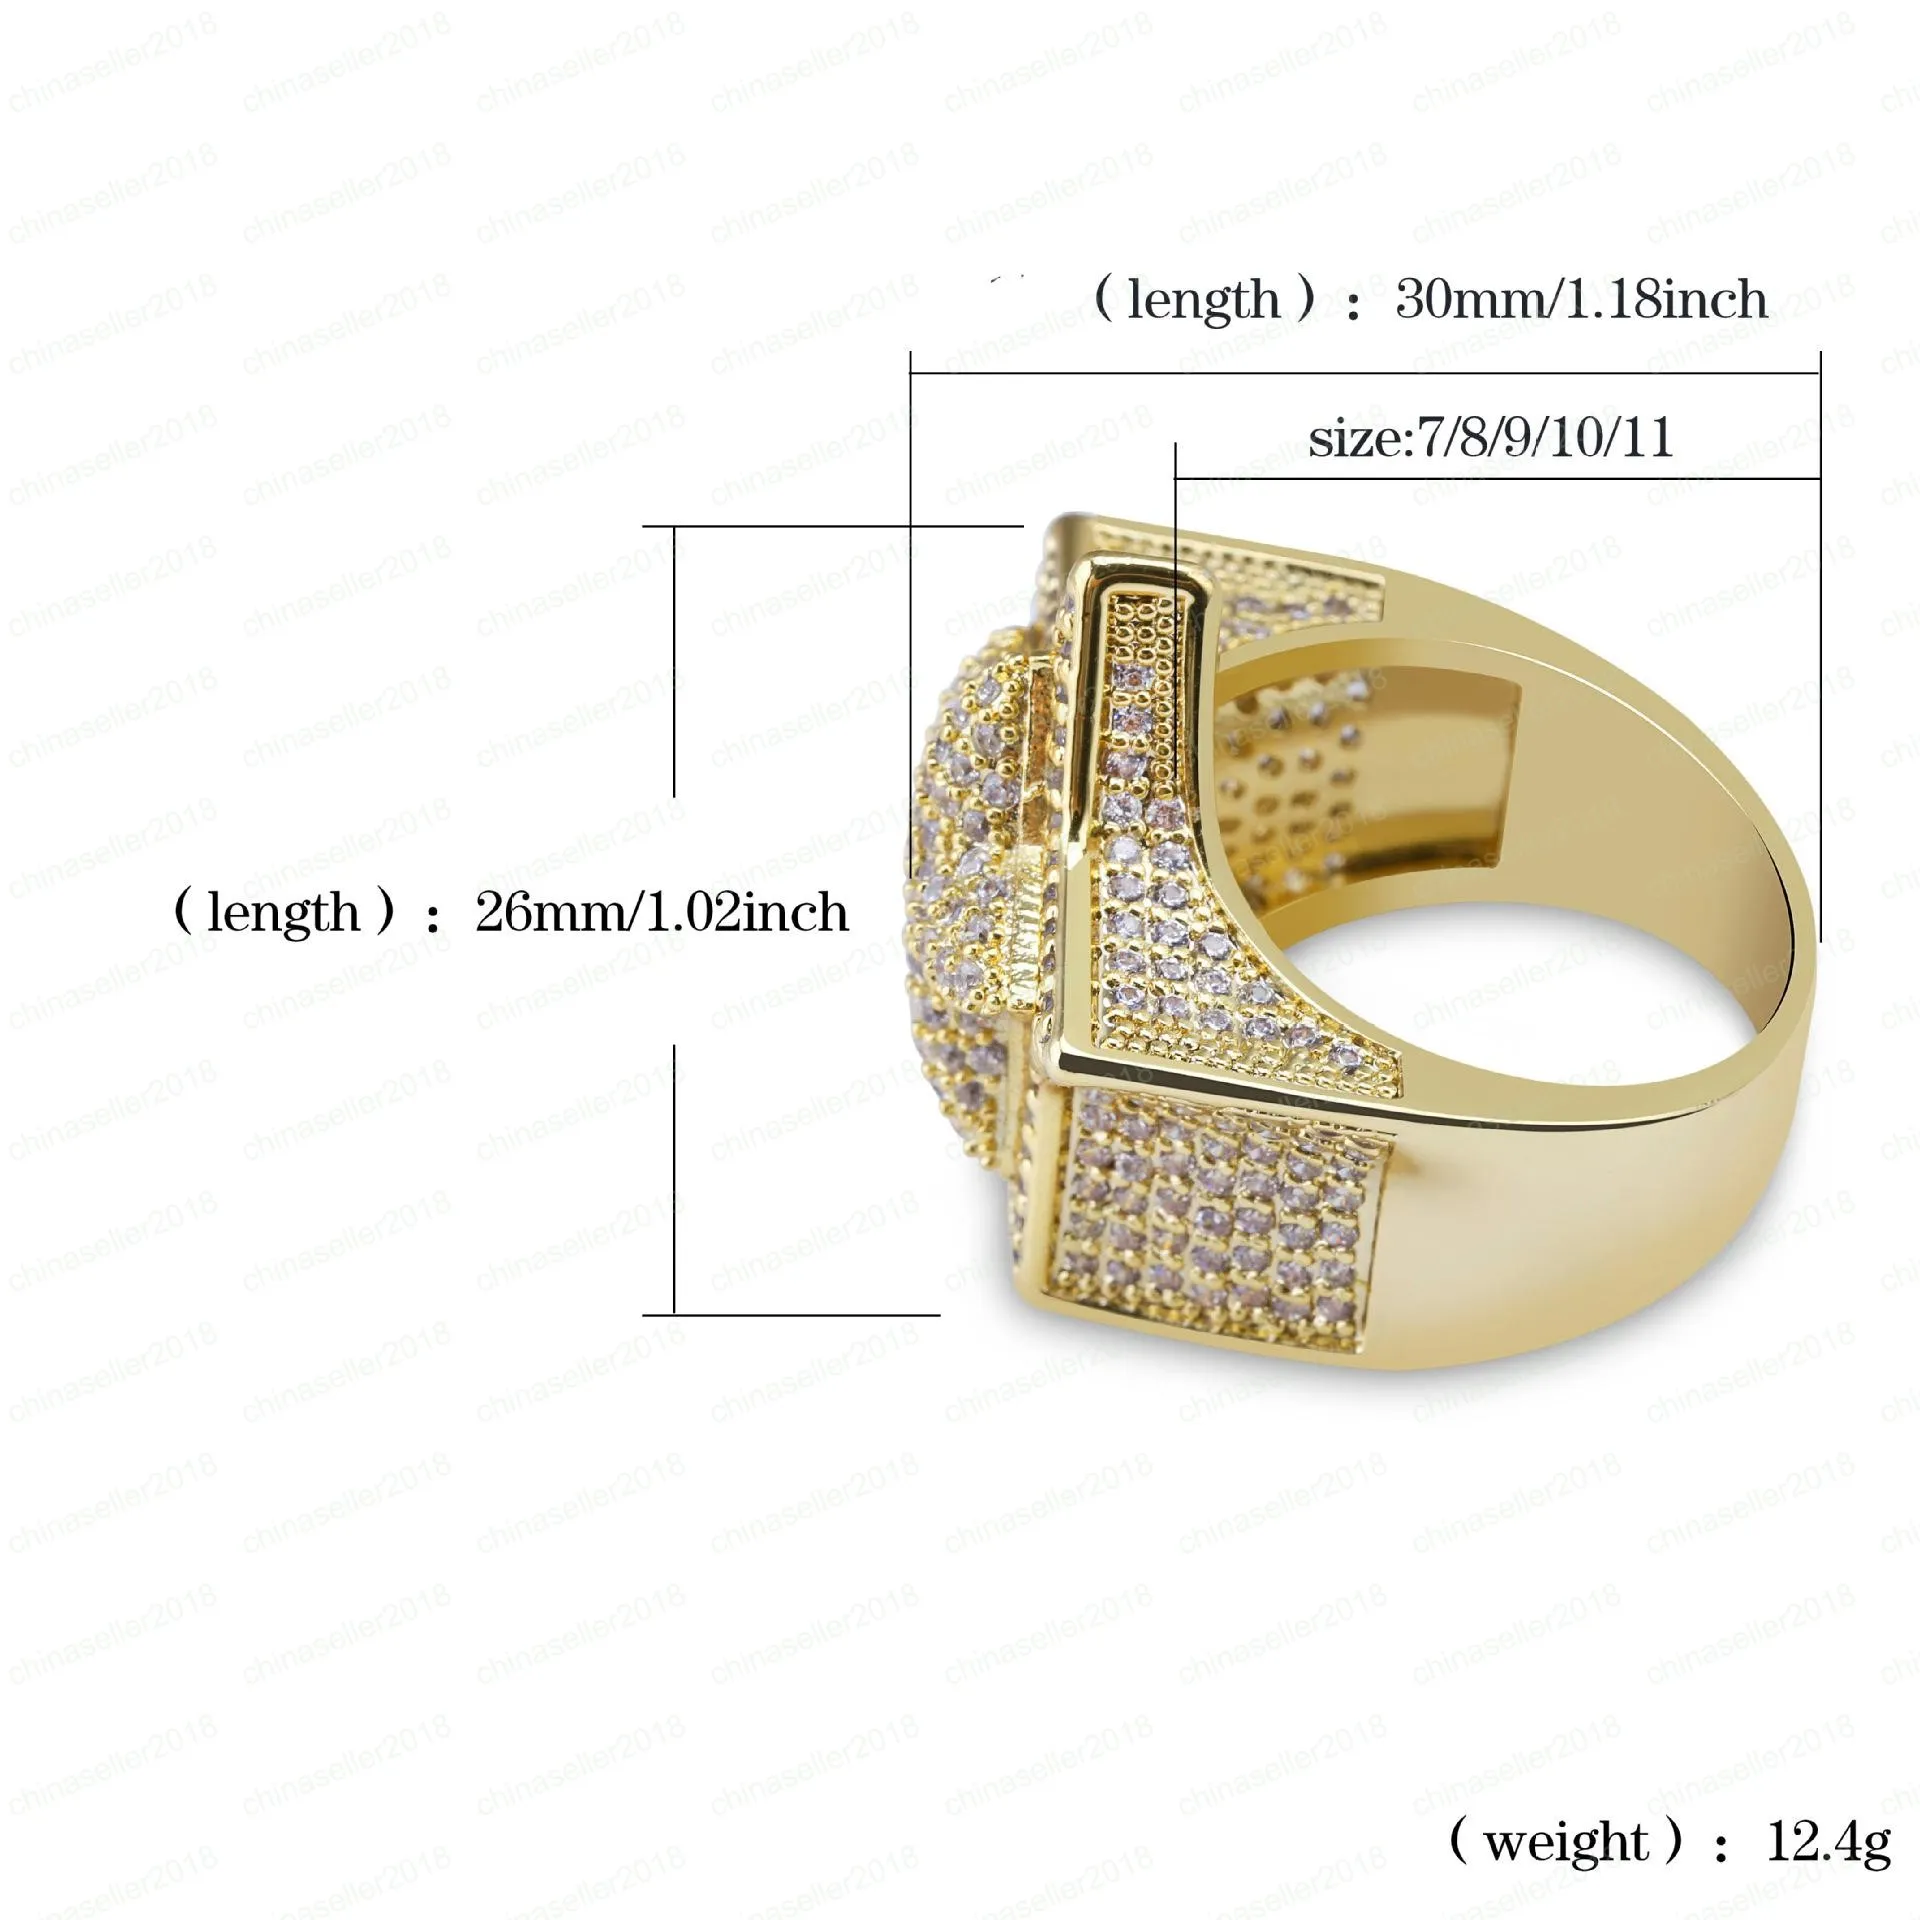 TEX 18K Yellow Gold Mens Nugget Design Fashion Ring 12 Grams (8)|Amazon.com